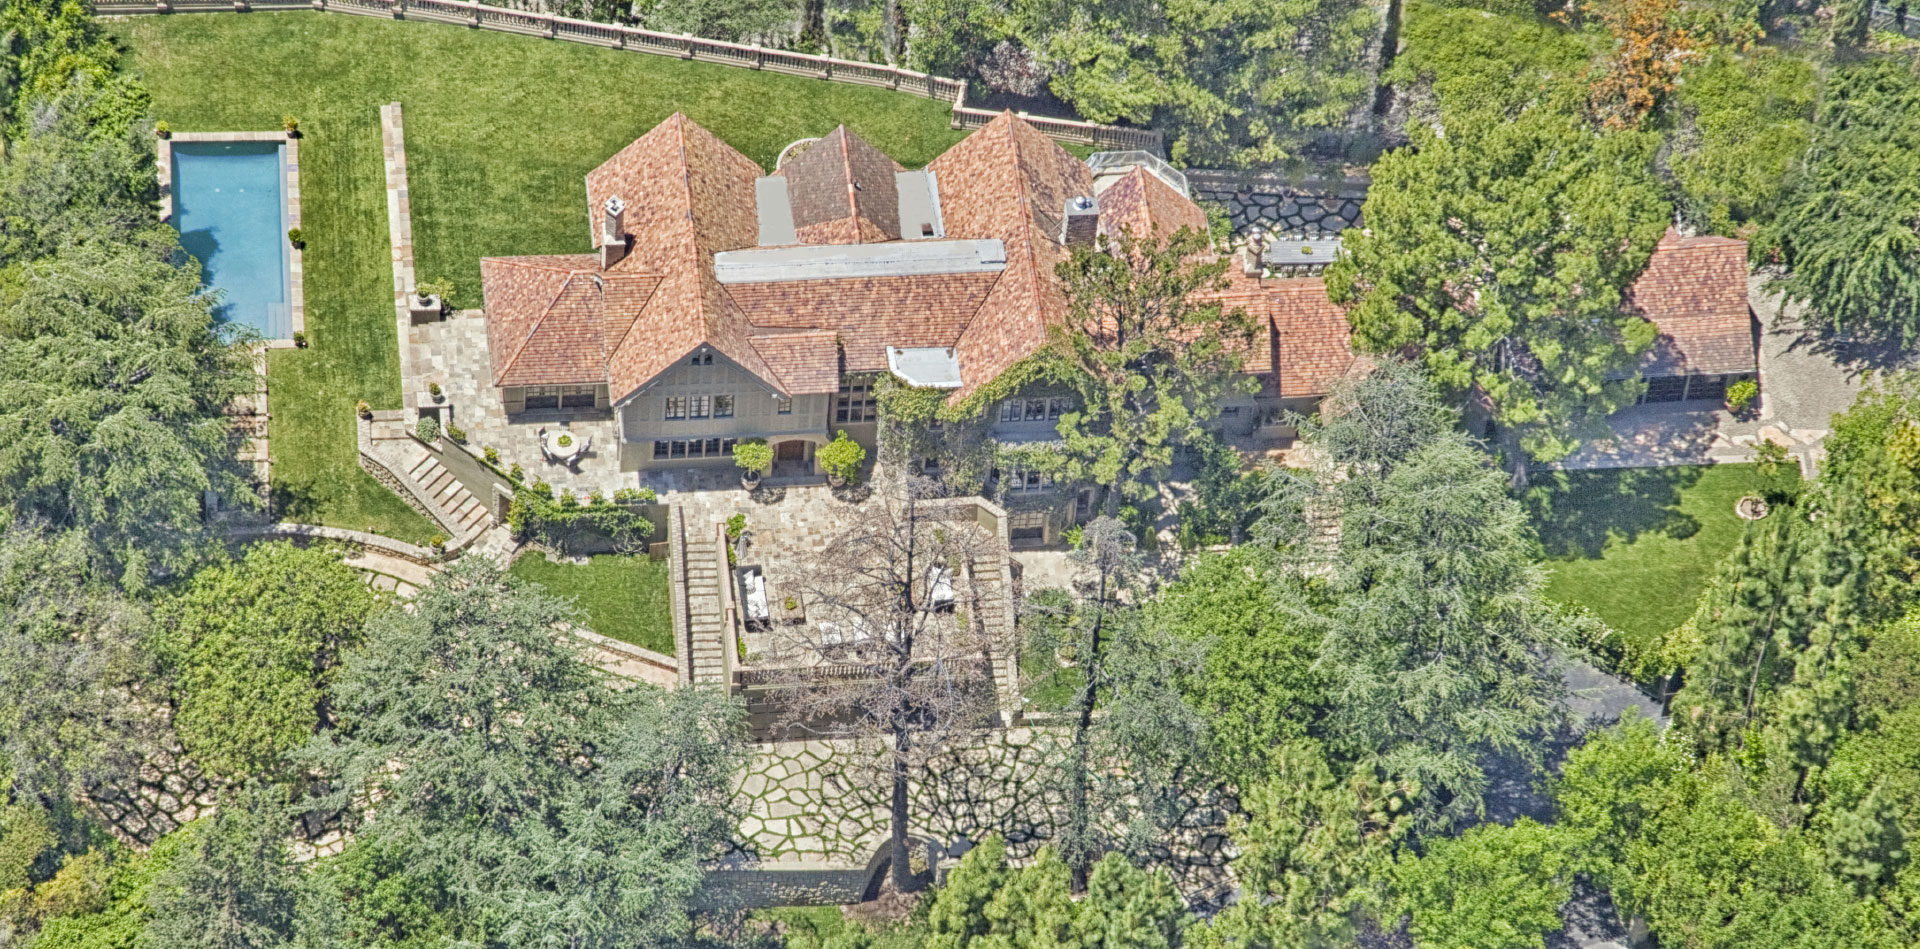 1240 Benedict Canyon Drive - The Harvey Mudd Estate  - $22,995,000